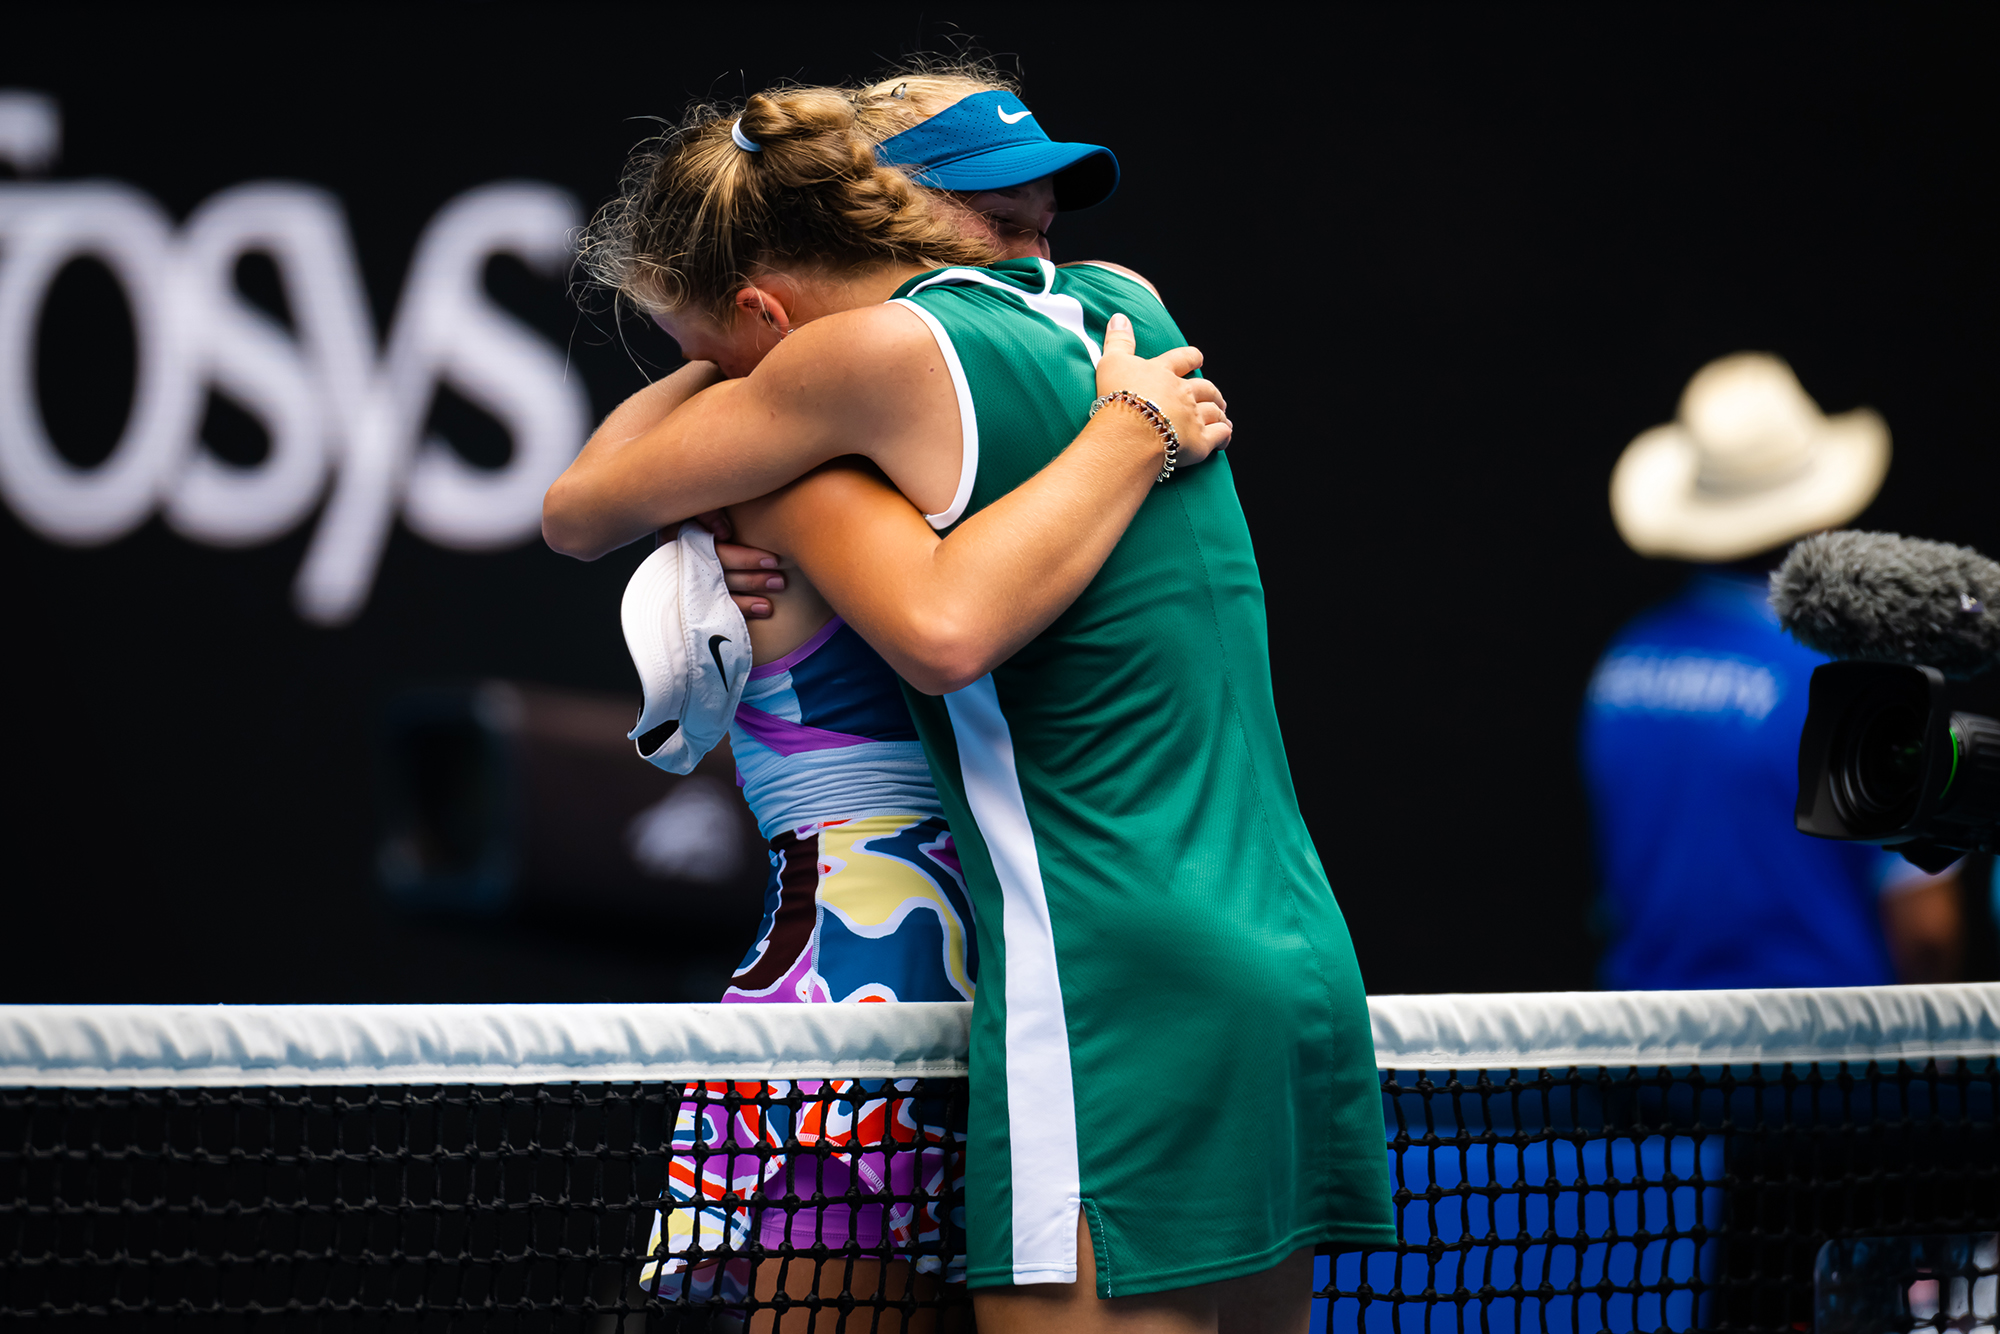 Мирра Андреева и Арина Корнеева после финального матча среди юниорок. Источник: Robert Prange / Getty Images